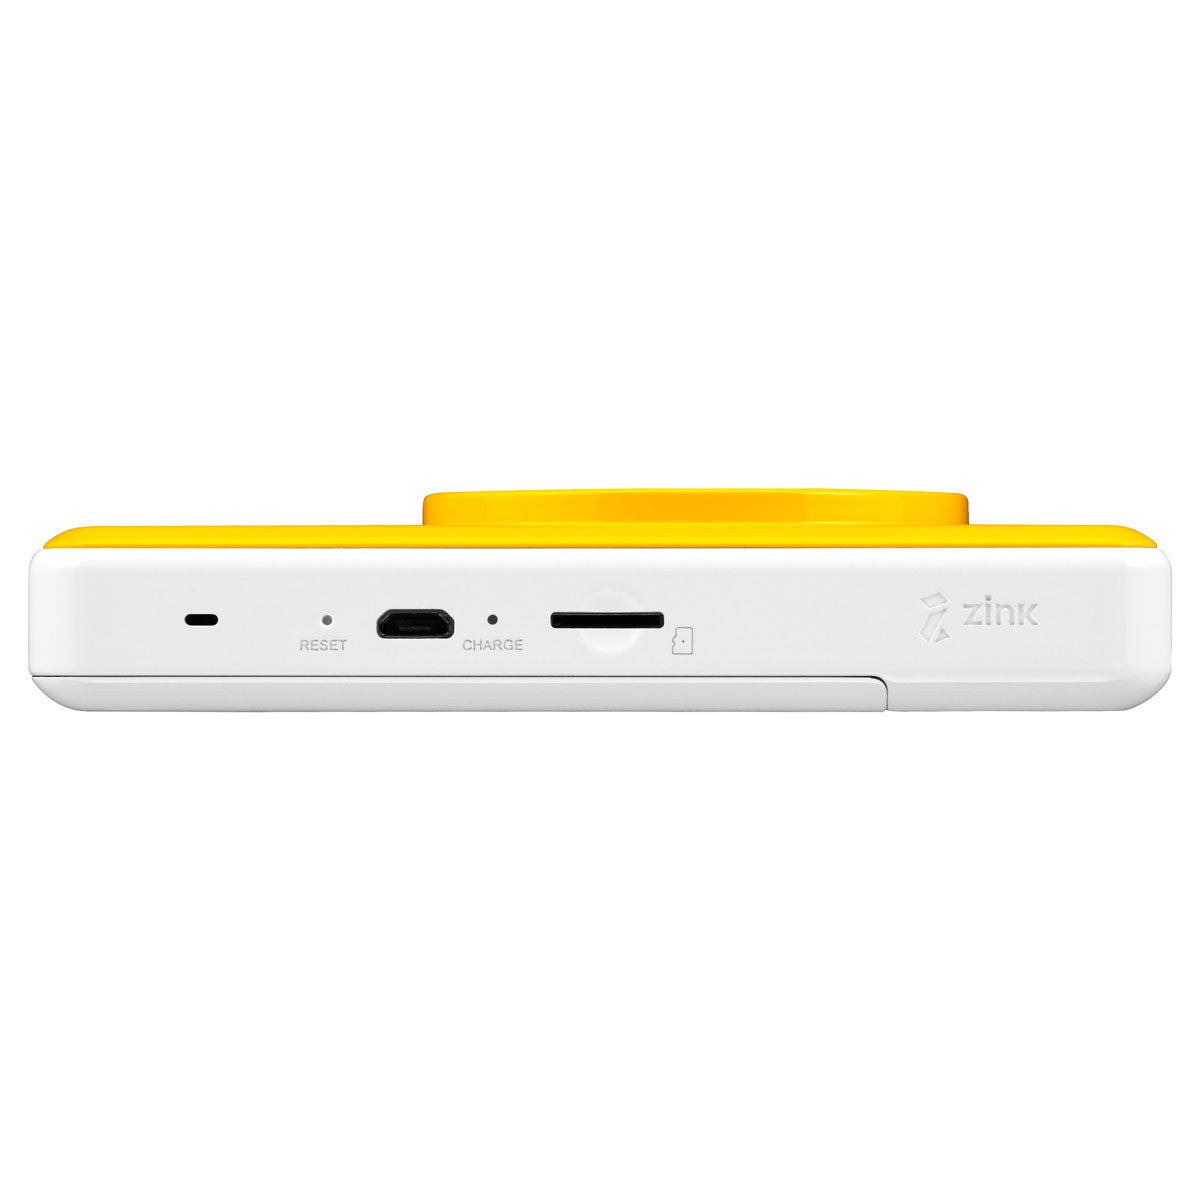 Canon IVY Cliq Instant Camera Printer (Bumble Bee Yellow)